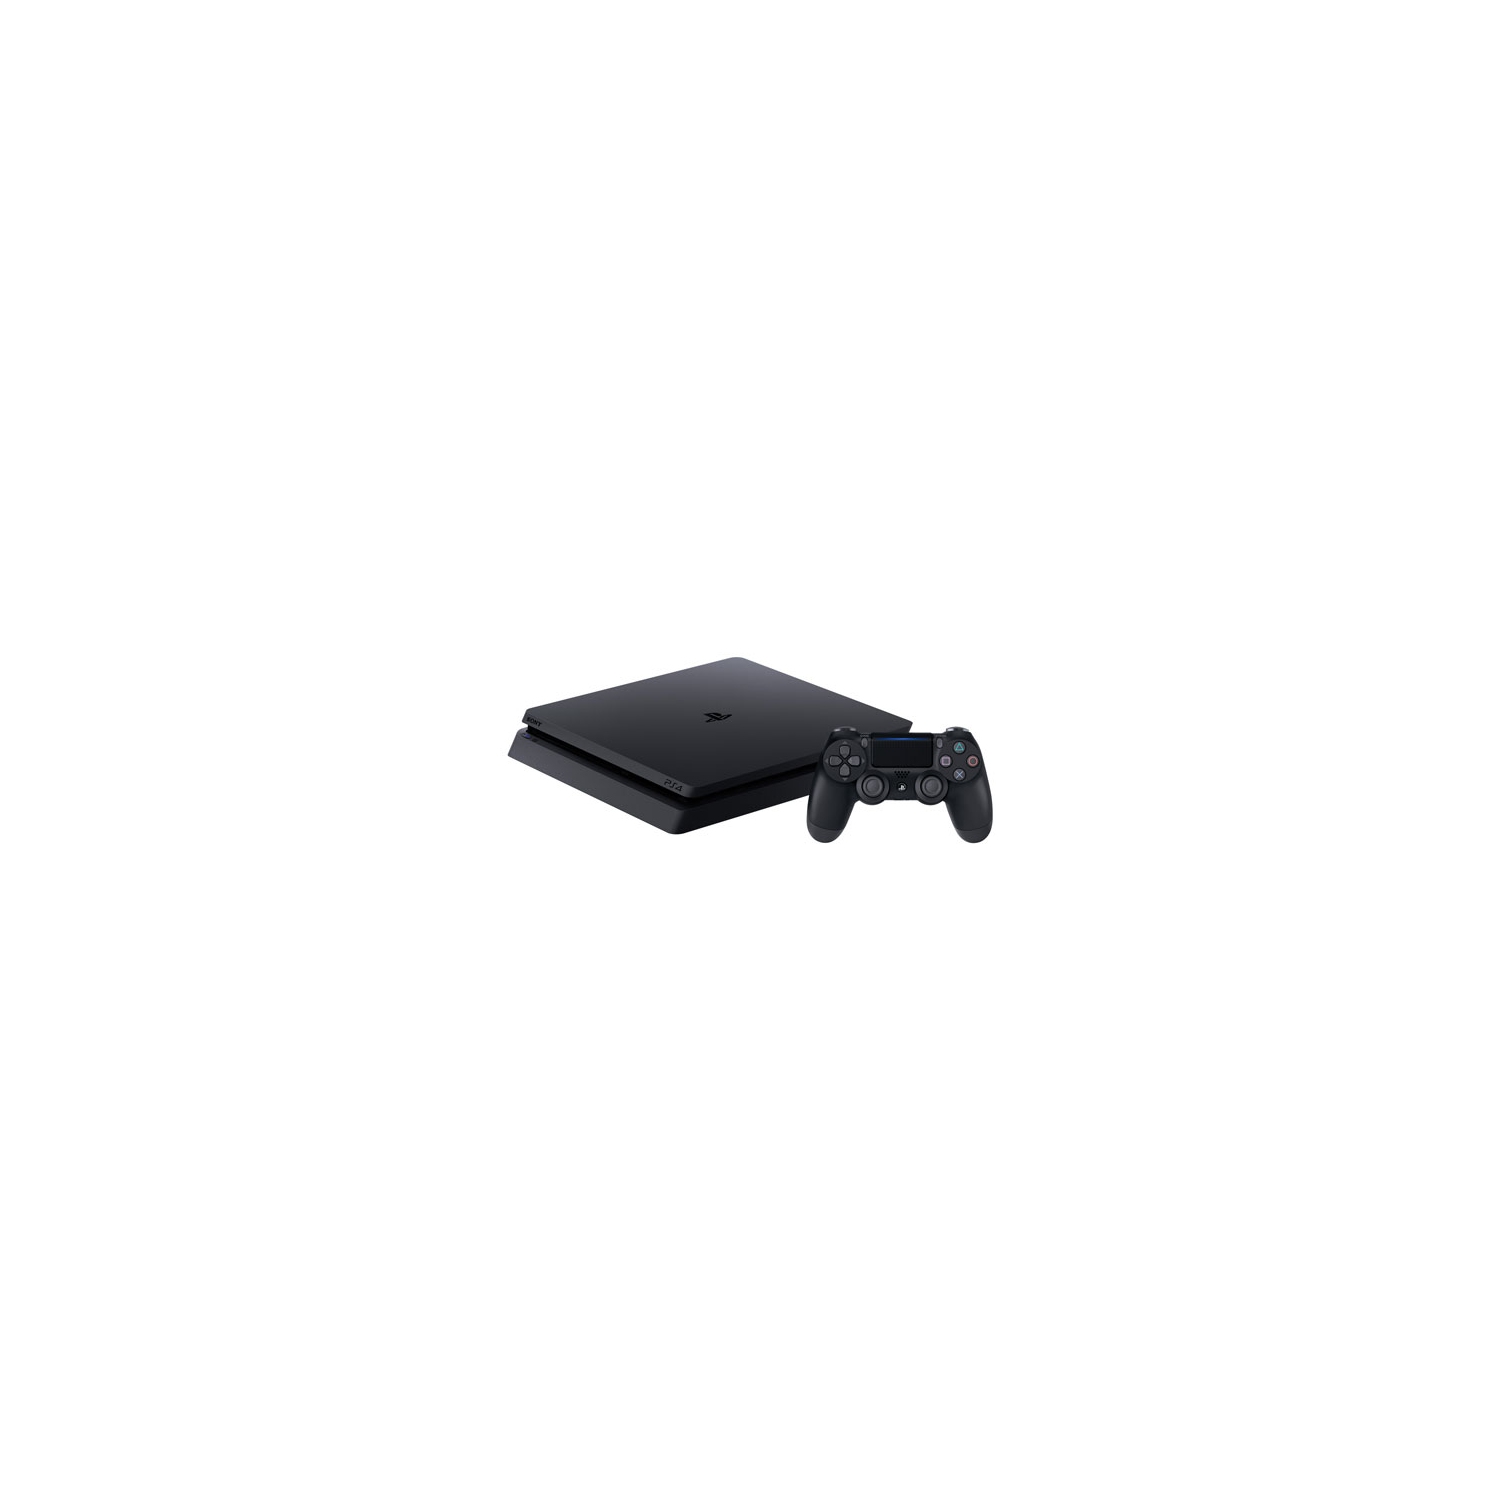 Refurbished (Good) - Sony PlayStation 4 PS4 Slim 500GB Console (Jet Black)